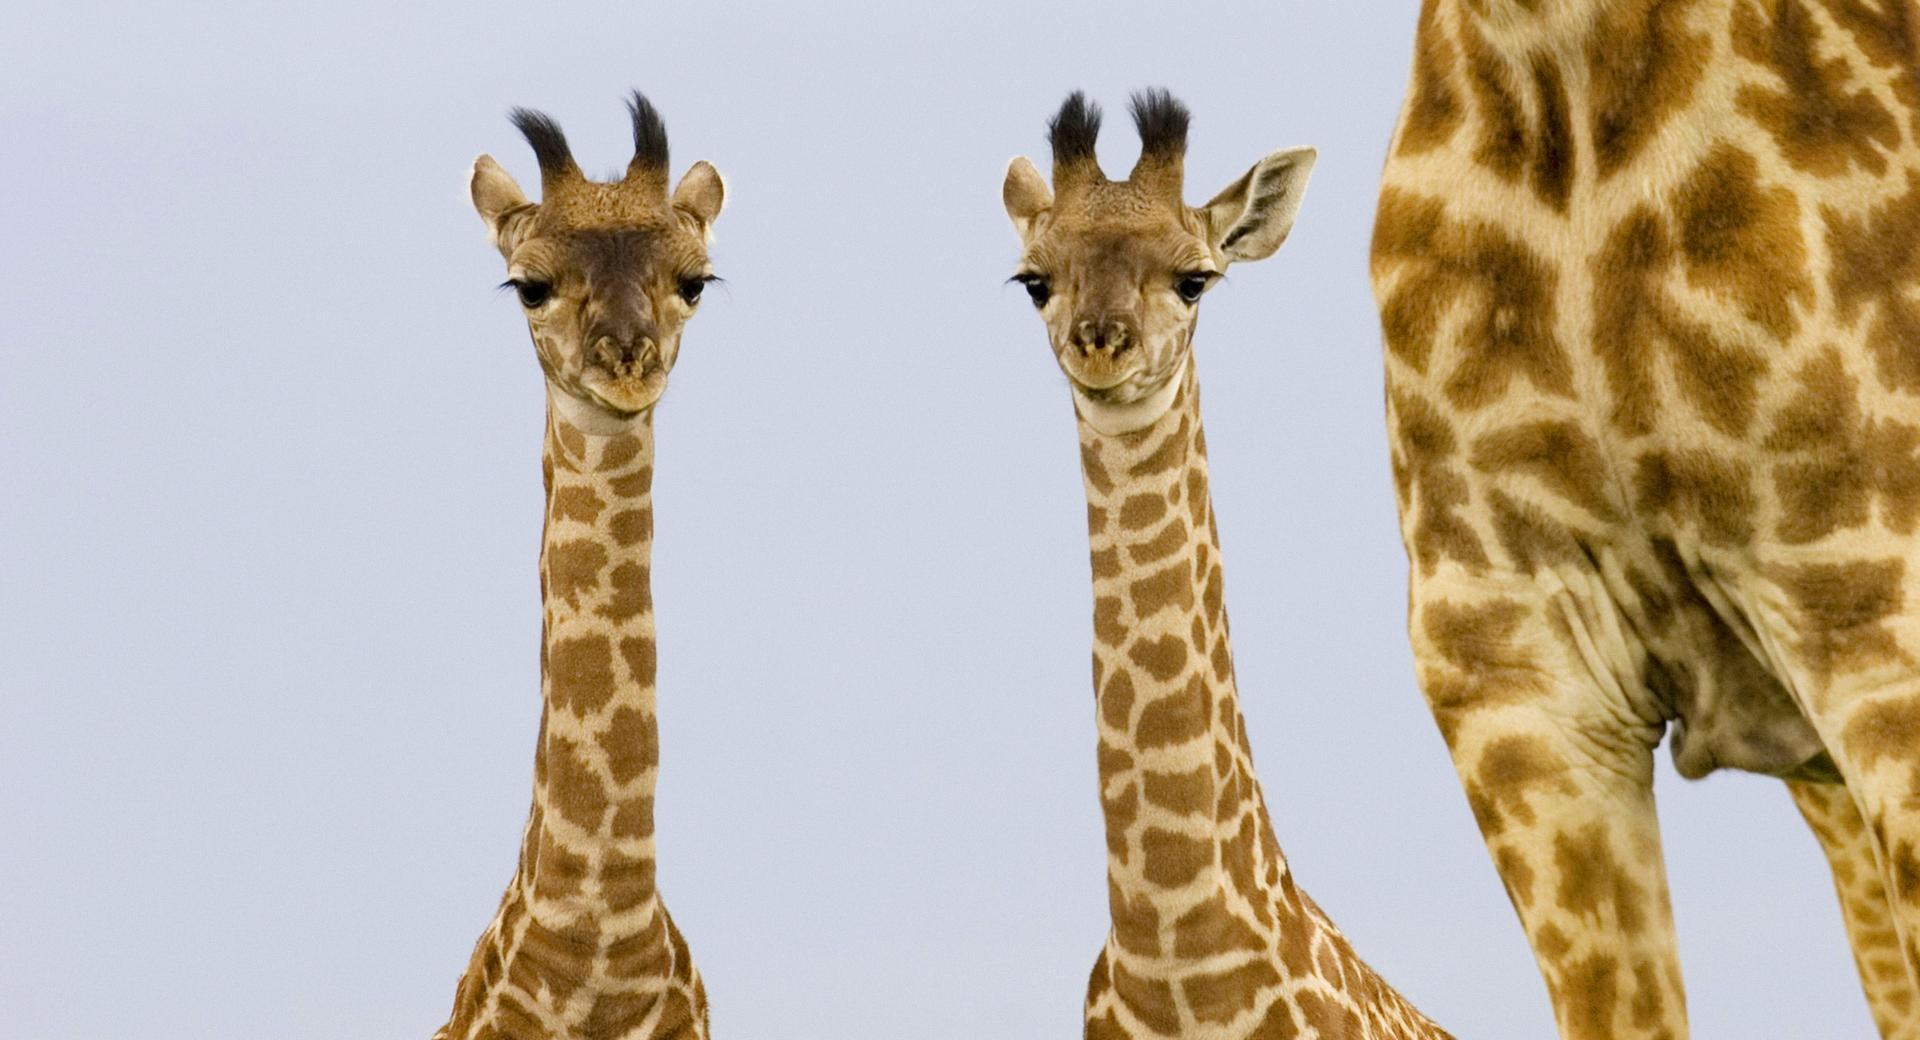 Two Newborn Giraffe Masai Mara Kenya at 640 x 960 iPhone 4 size wallpapers HD quality